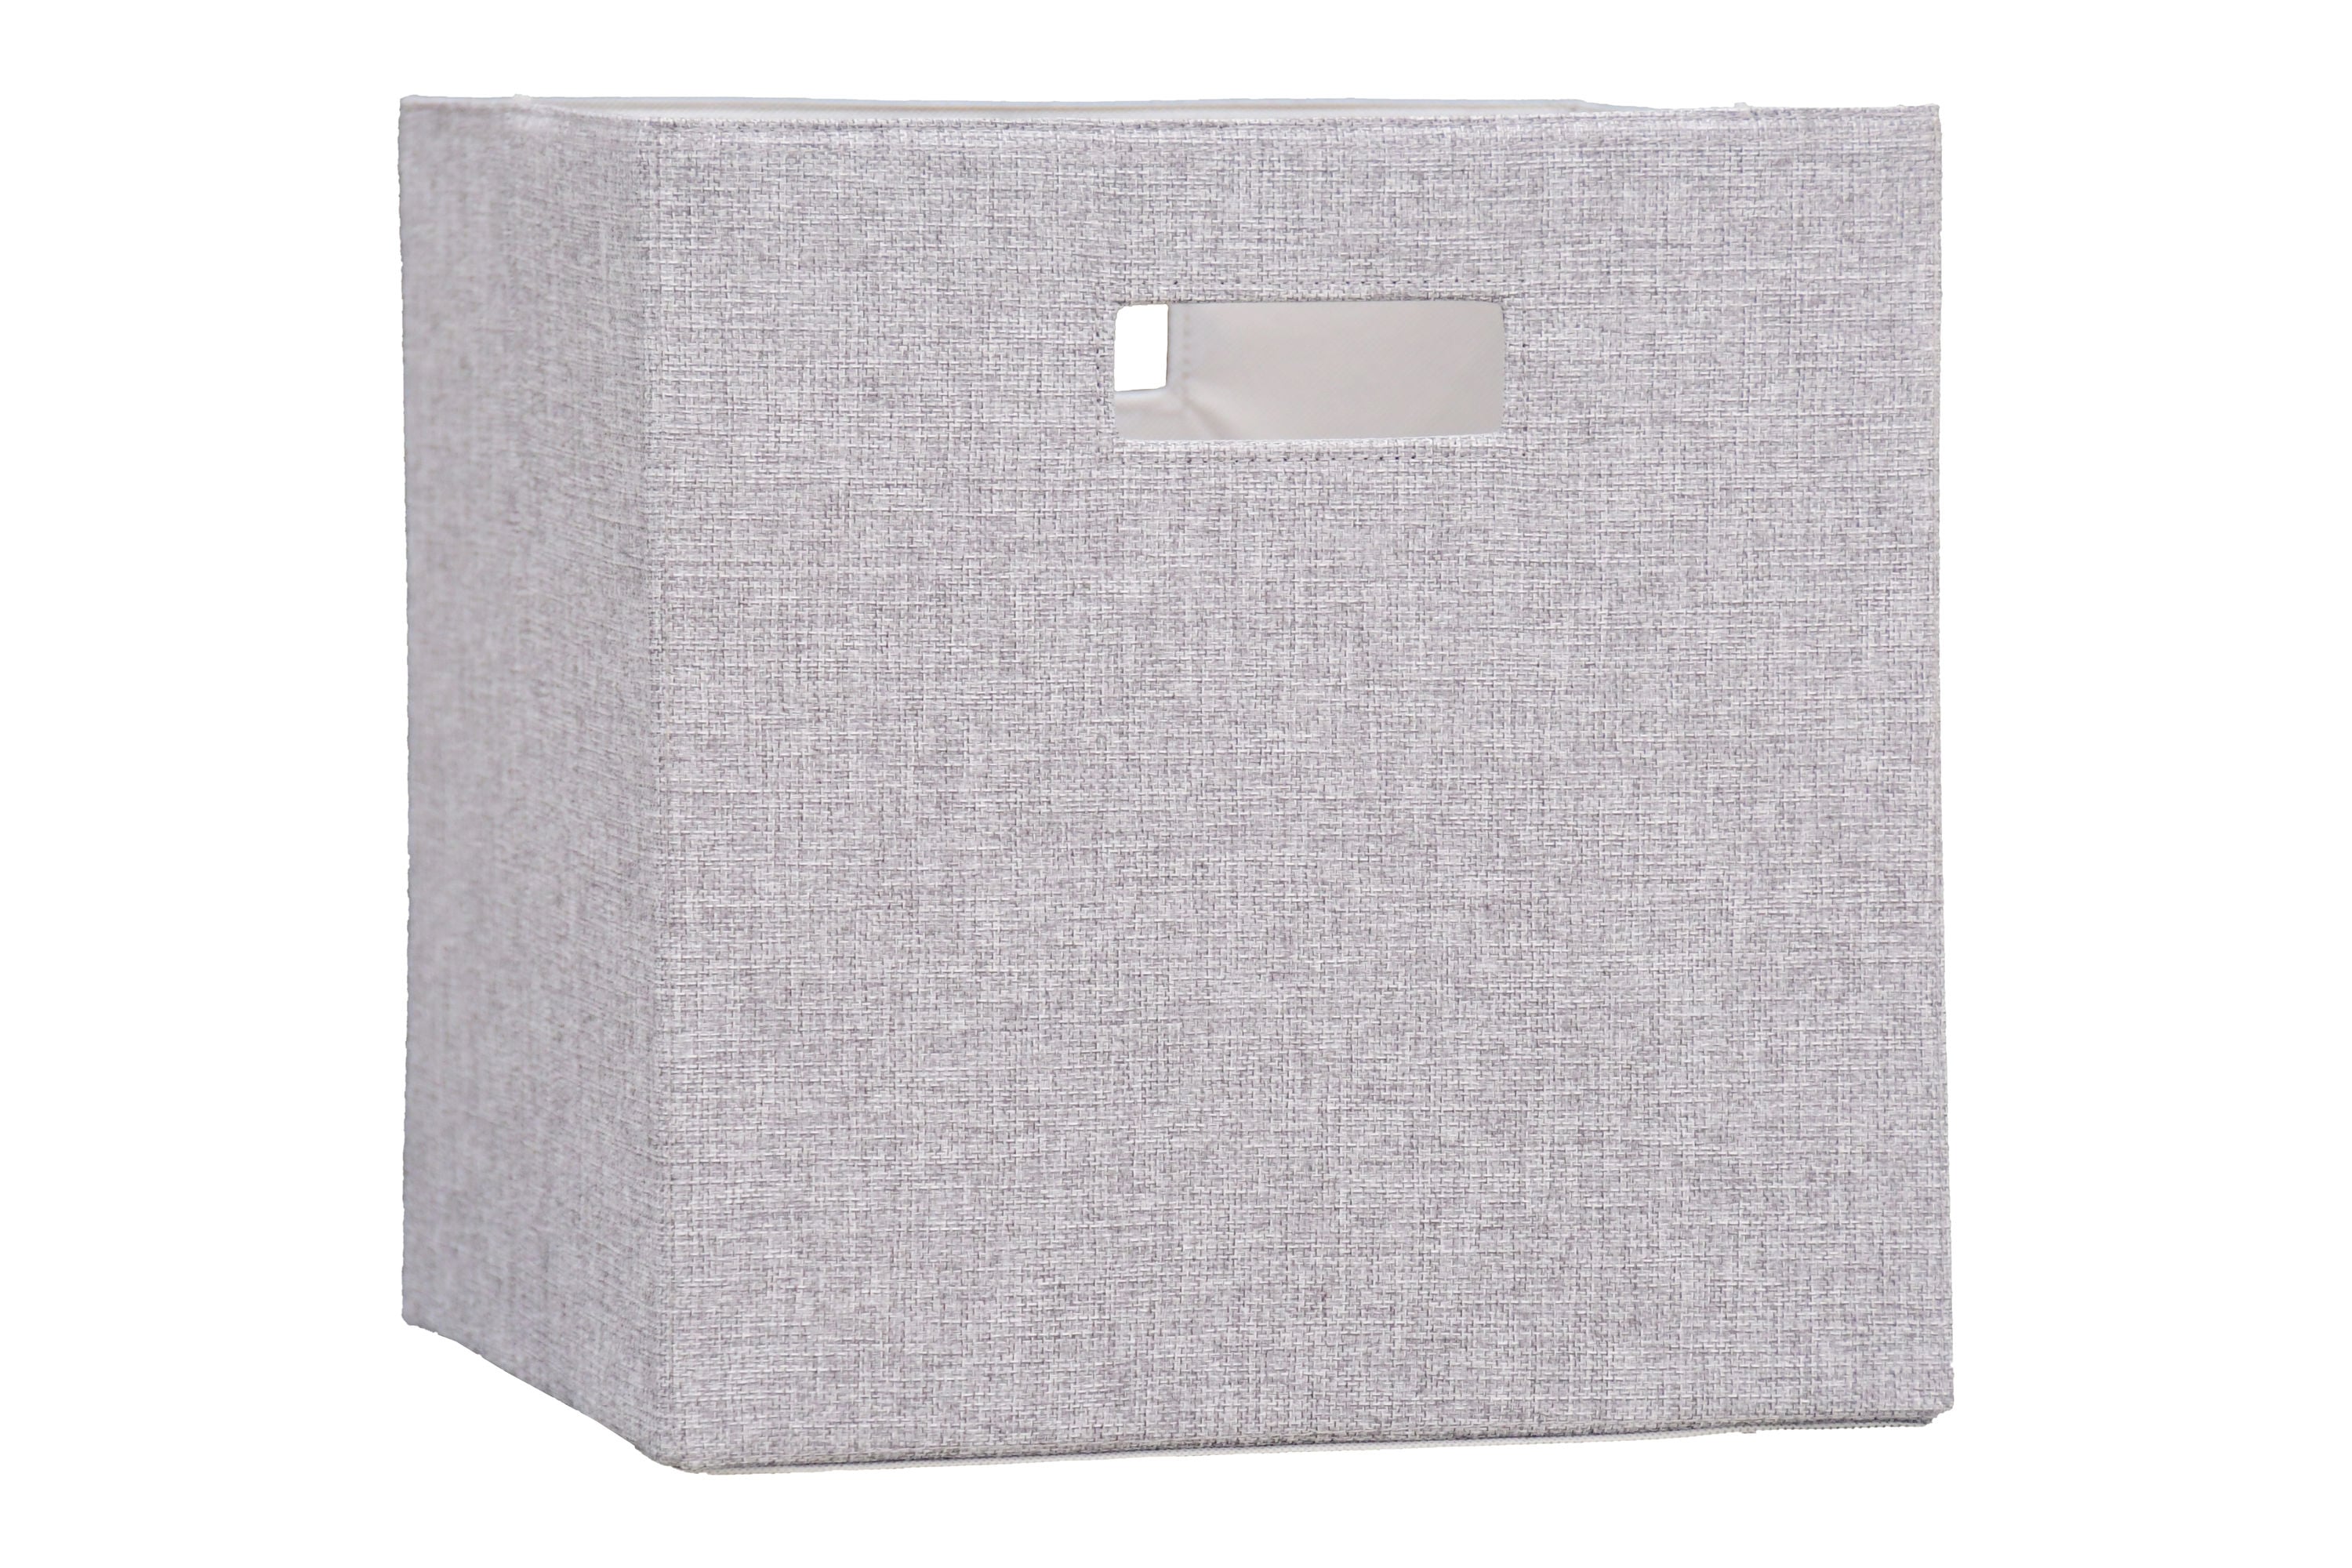 10 in. H x 10 in. W x 15 in. D Gray Fabric Cube Storage Bin